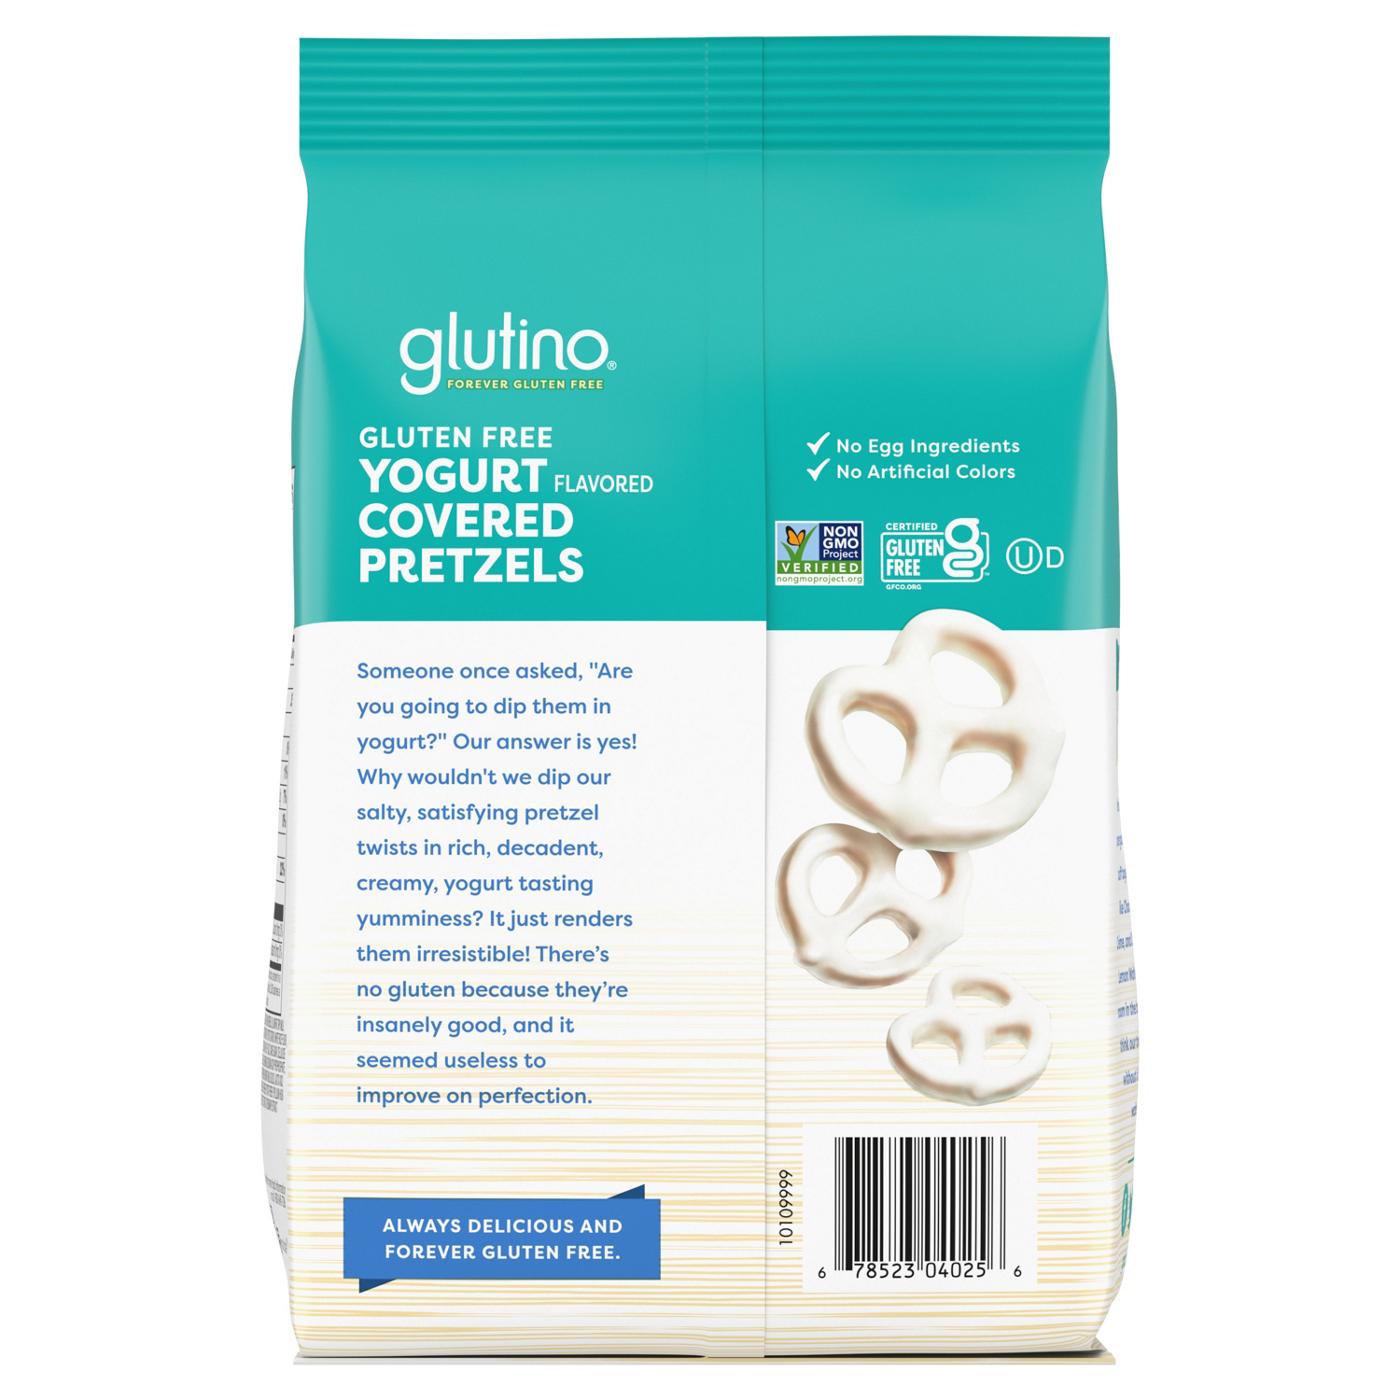 Glutino Gluten Free Yogurt Flavored Covered Pretzels; image 3 of 4